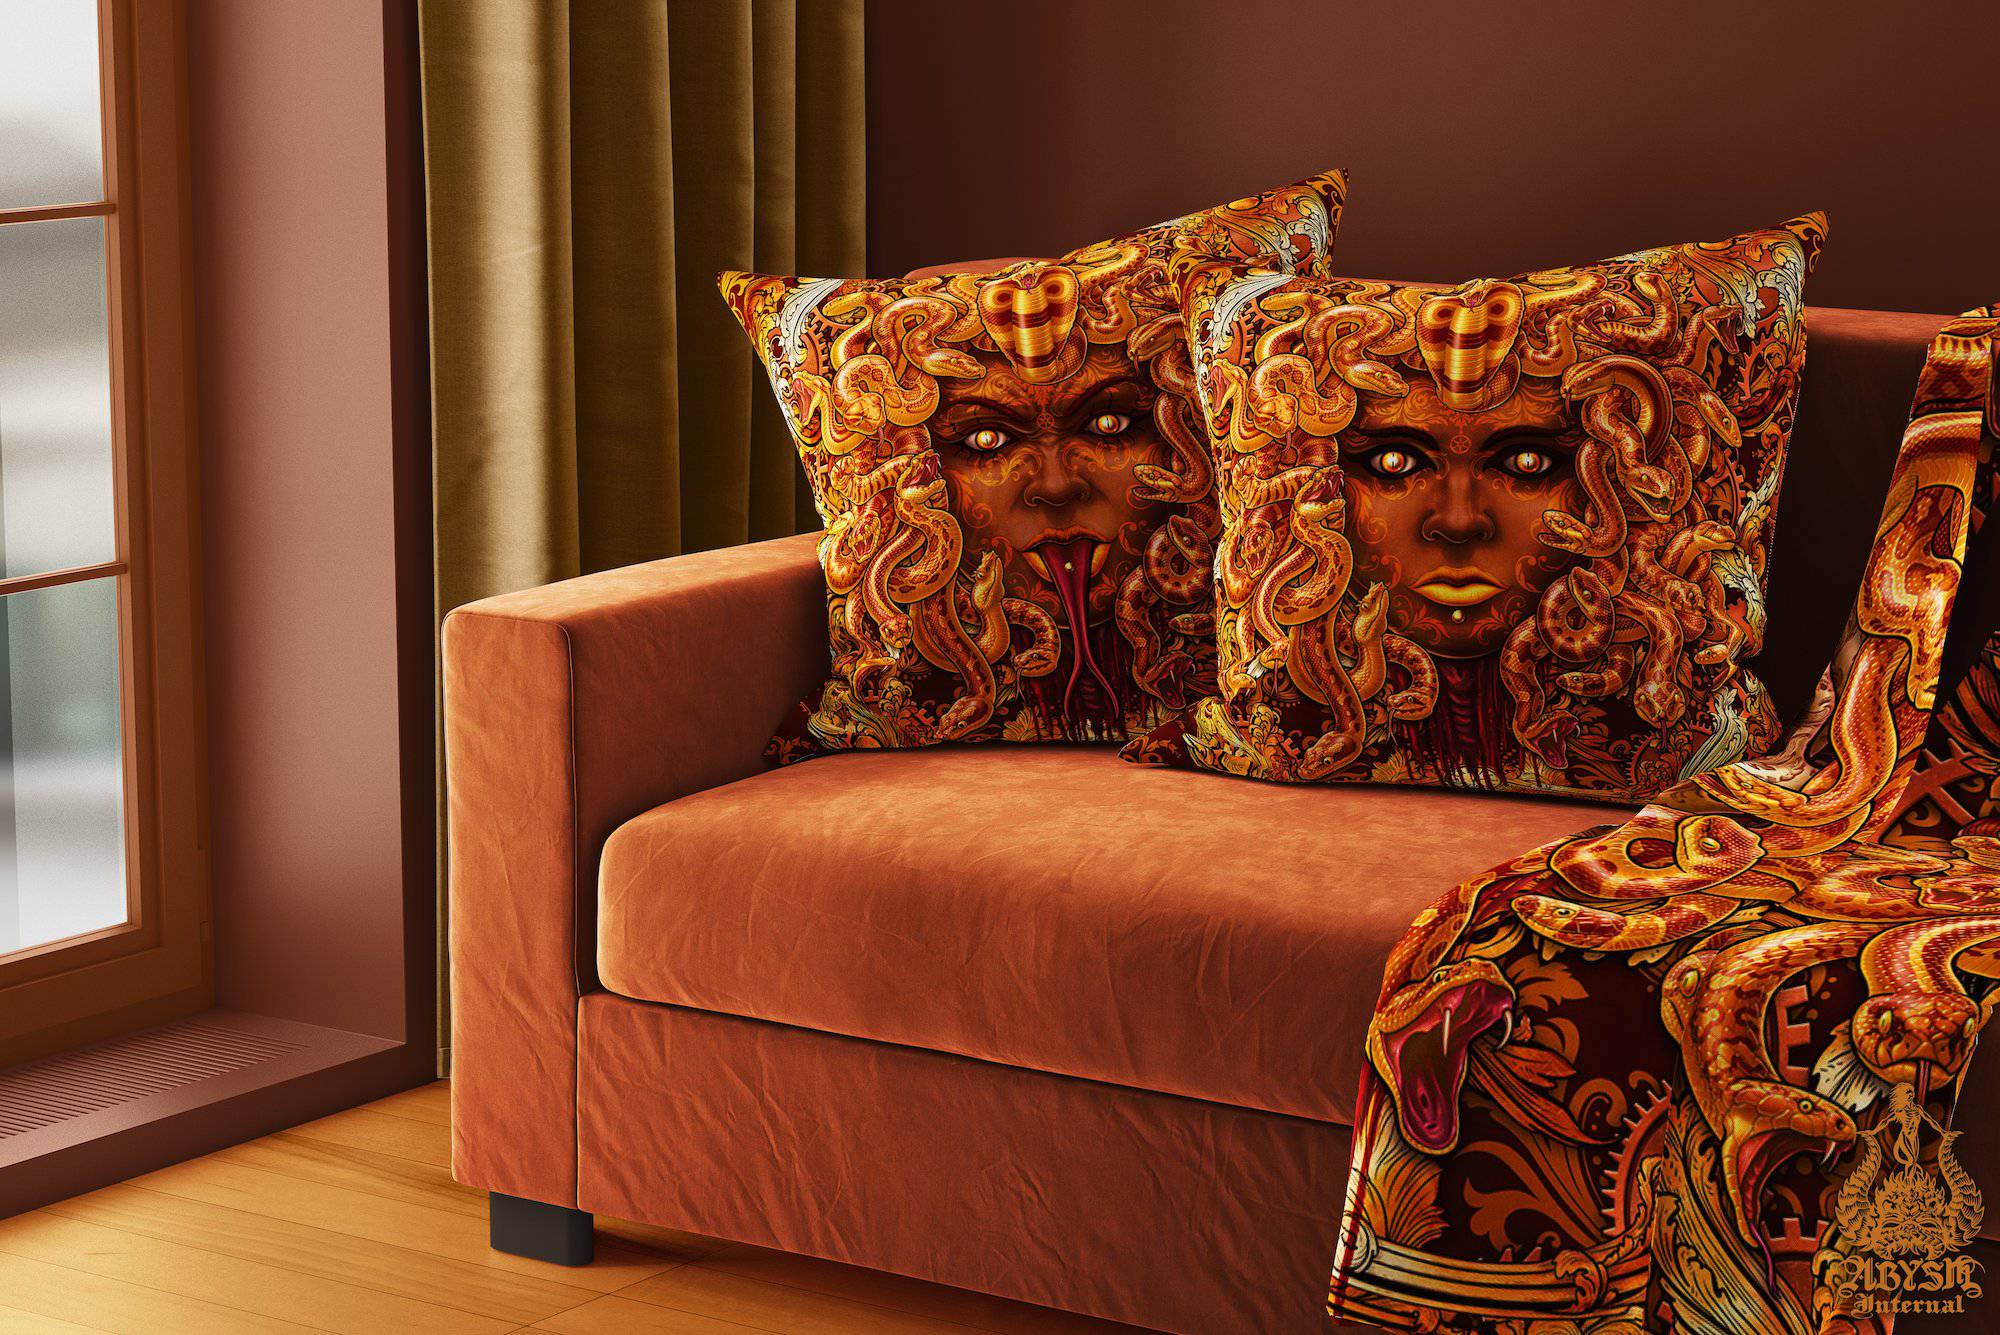 Steampunk Throw Pillow, Decorative Accent Cushion, Medusa, Gamer Room Decor - Bronze Snakes, Mock - Abysm Internal